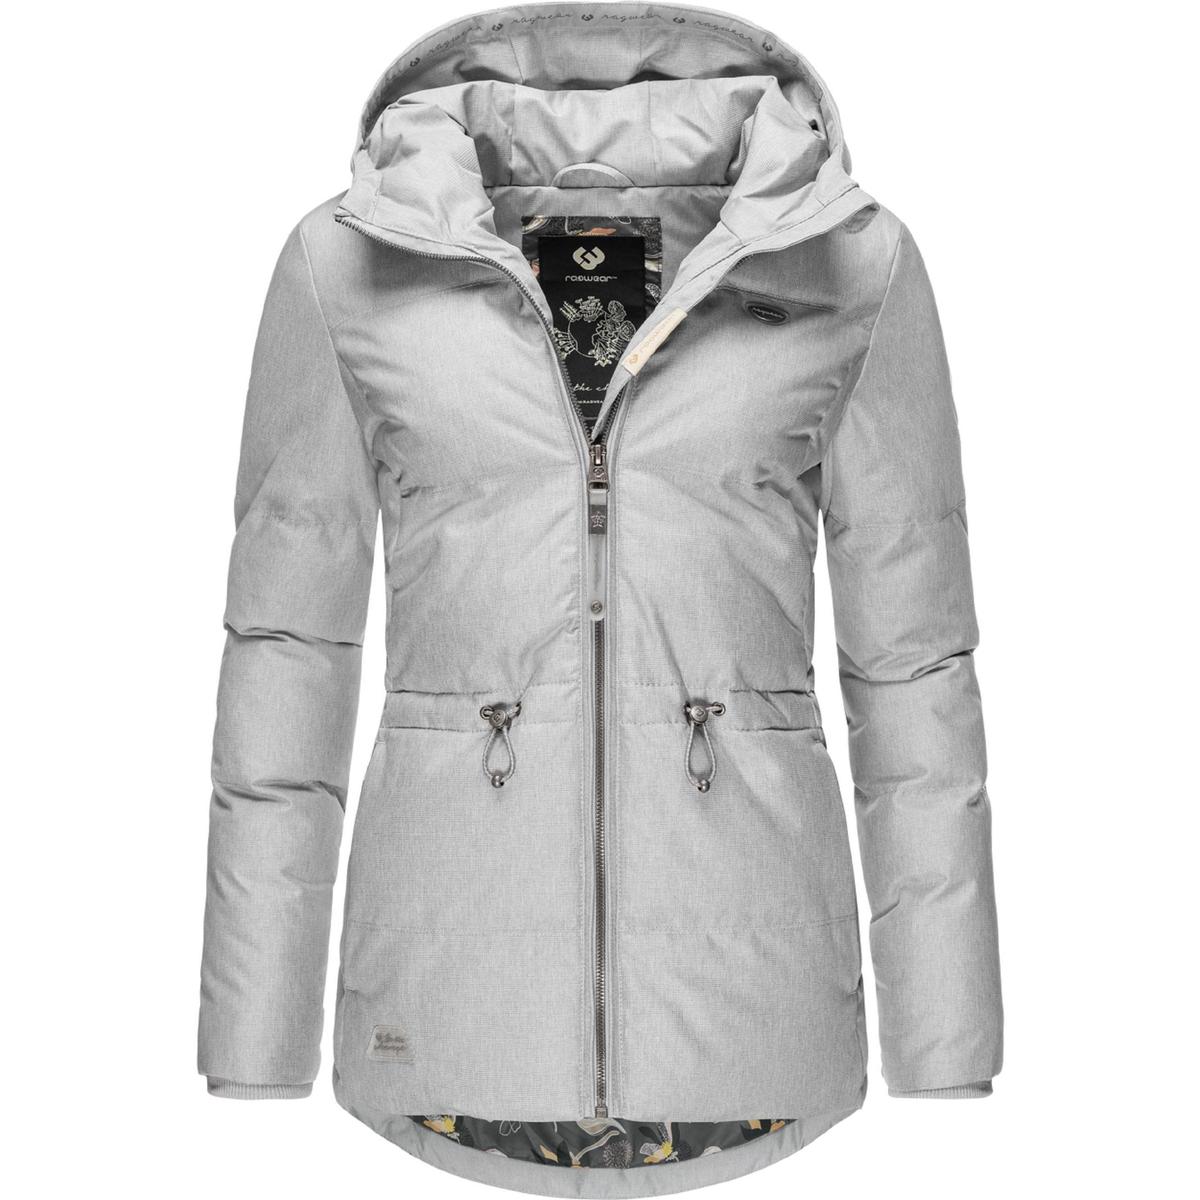 Ragwear Winterjacke Calena Intl. Grau - Kleidung Jacken Damen 149,95 €